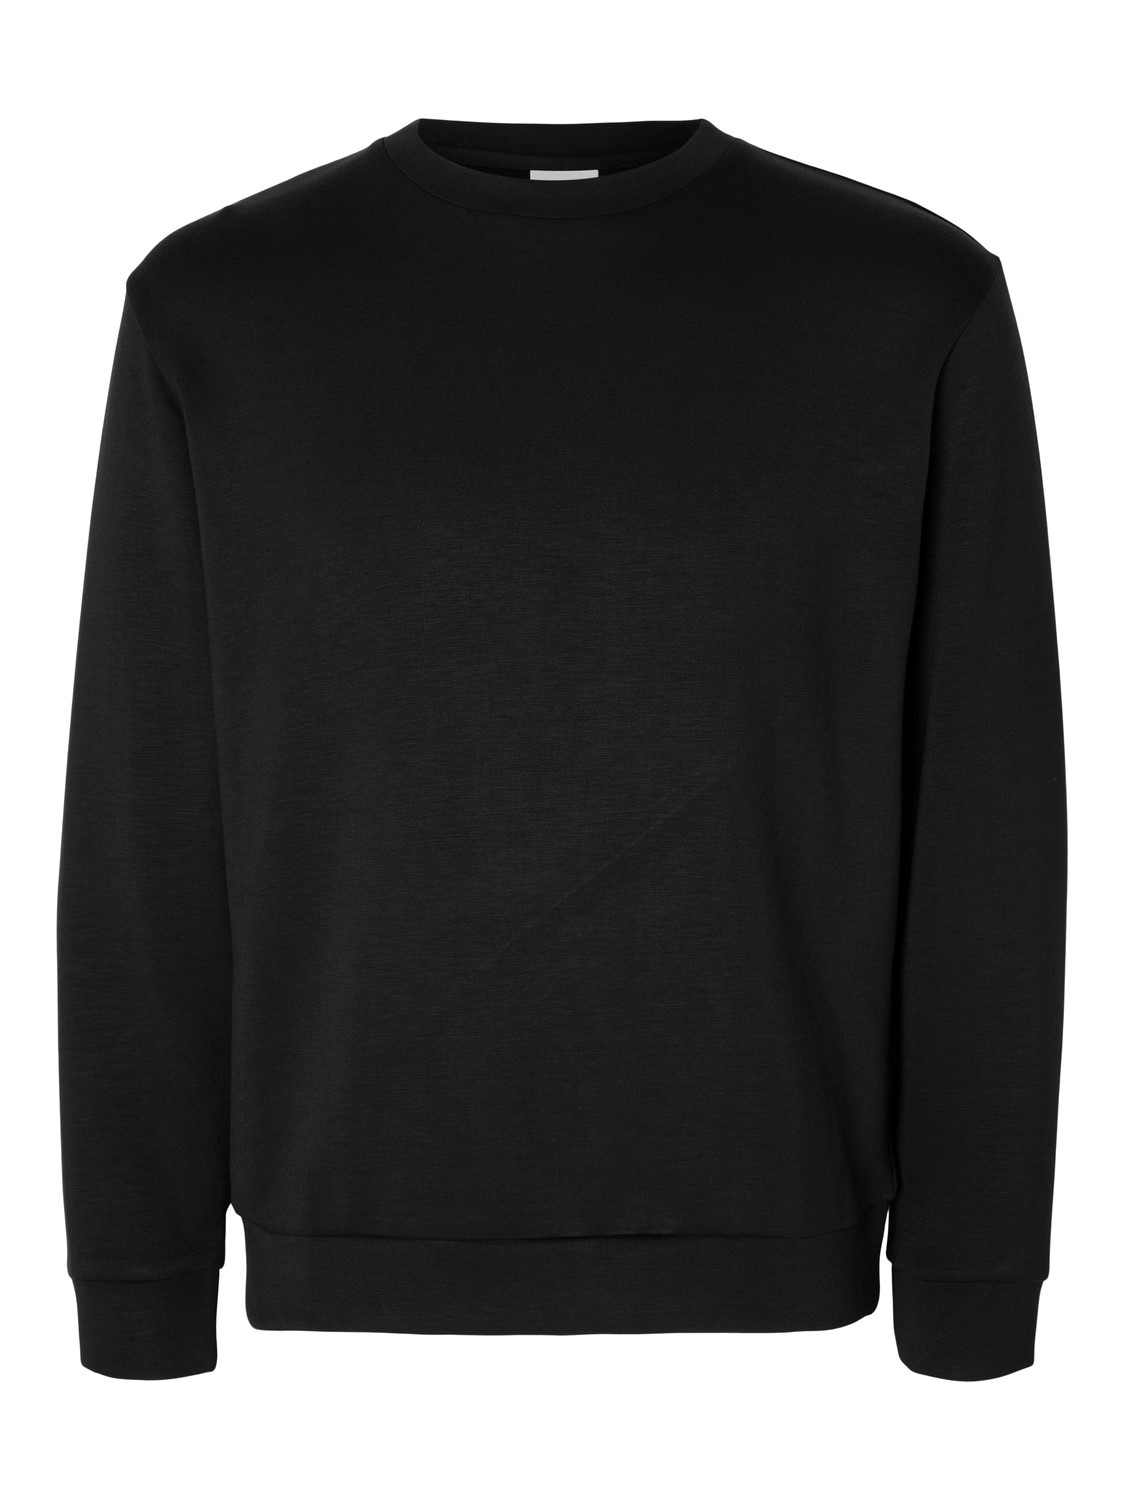 Пуловер SELECTED HOMME SLHEMANUEL, черный пуловер selected homme slhvince коричневый